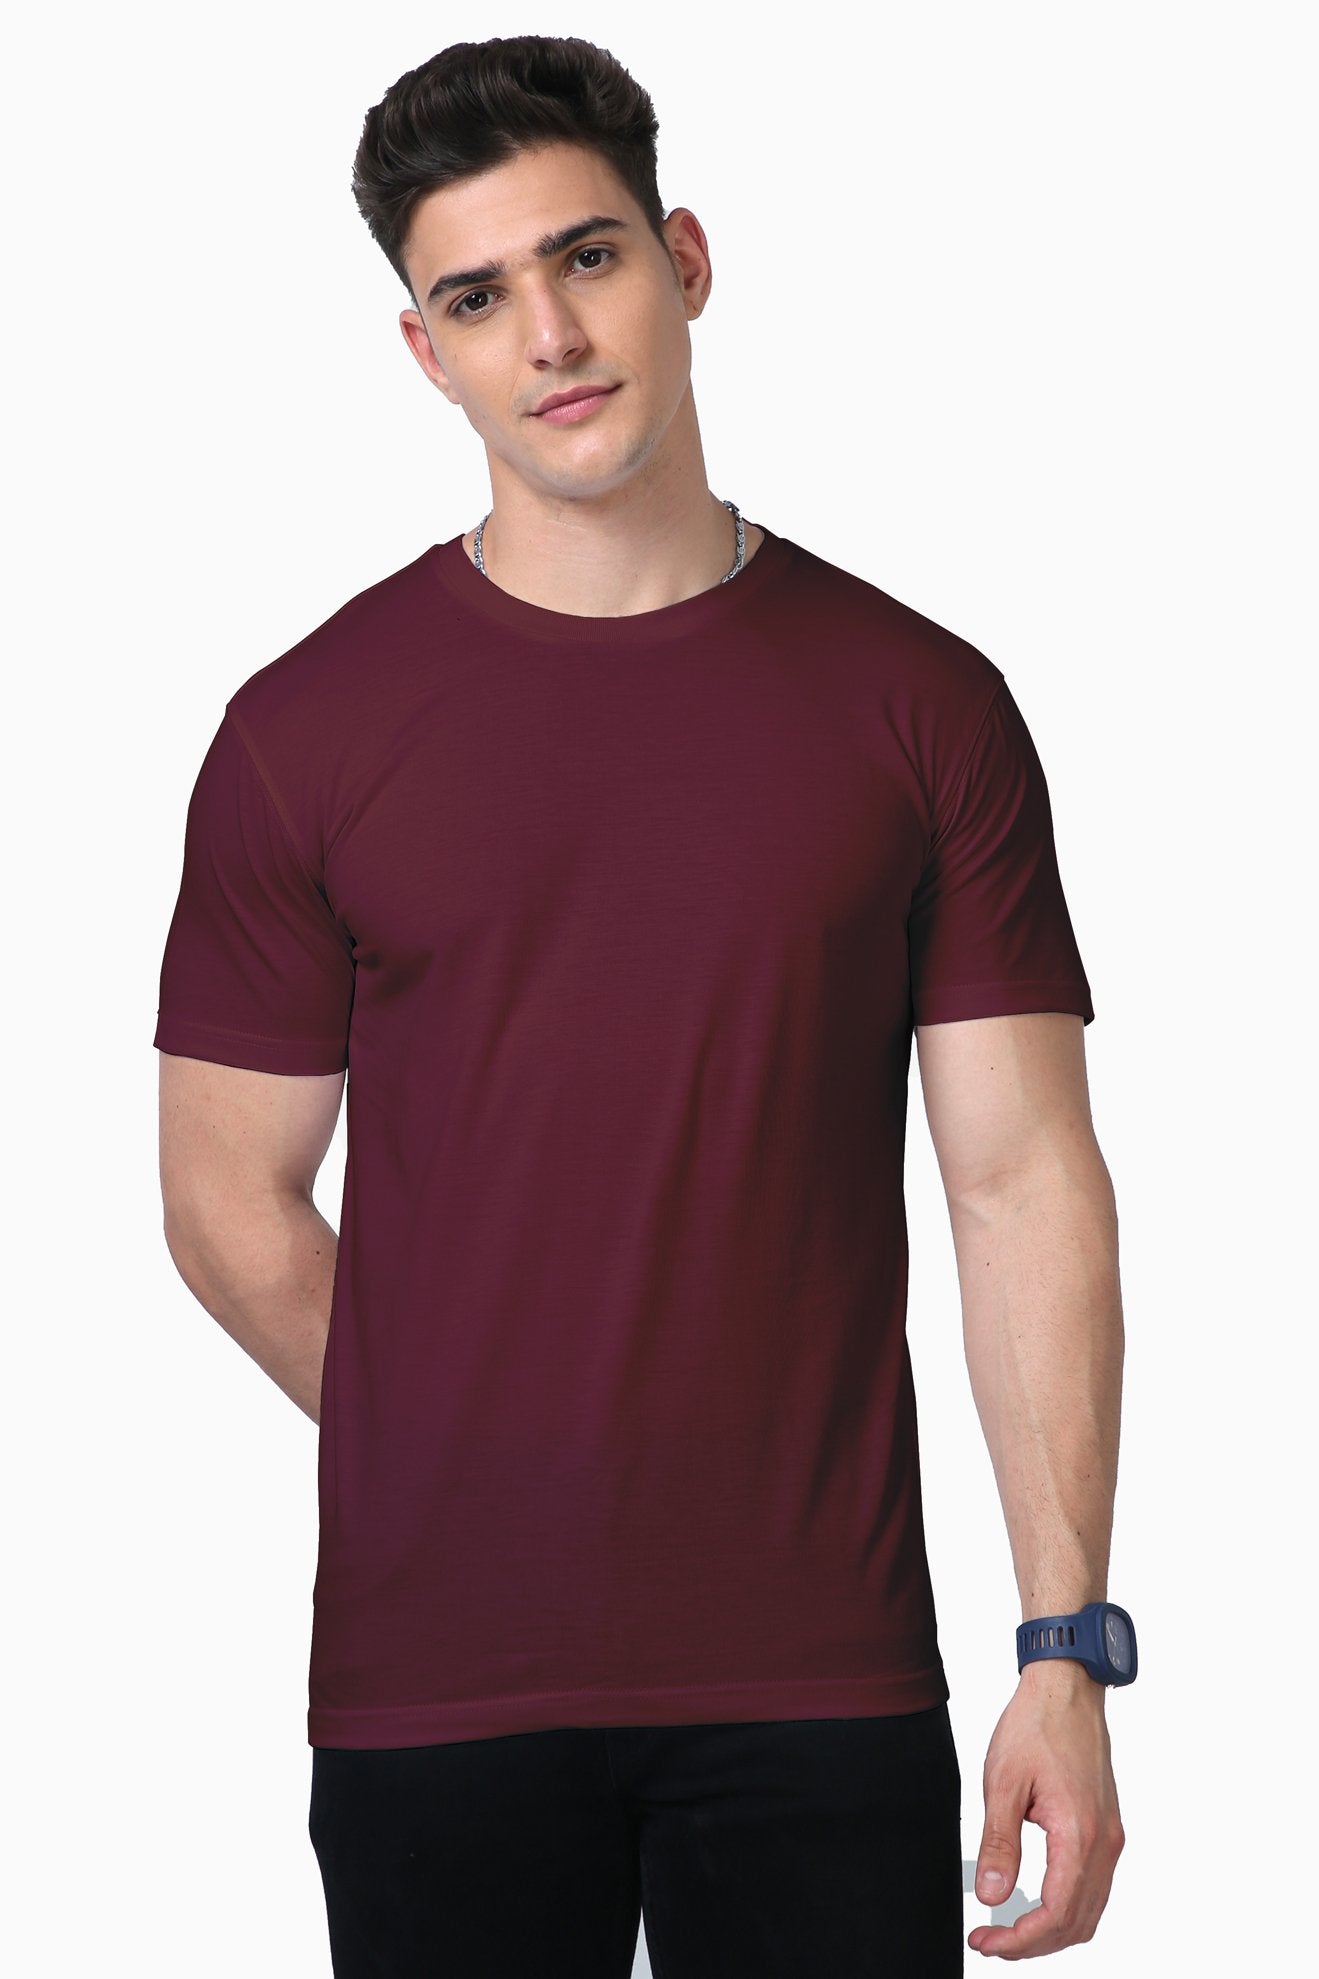 Unisex Supima T-Shirts - The Minies